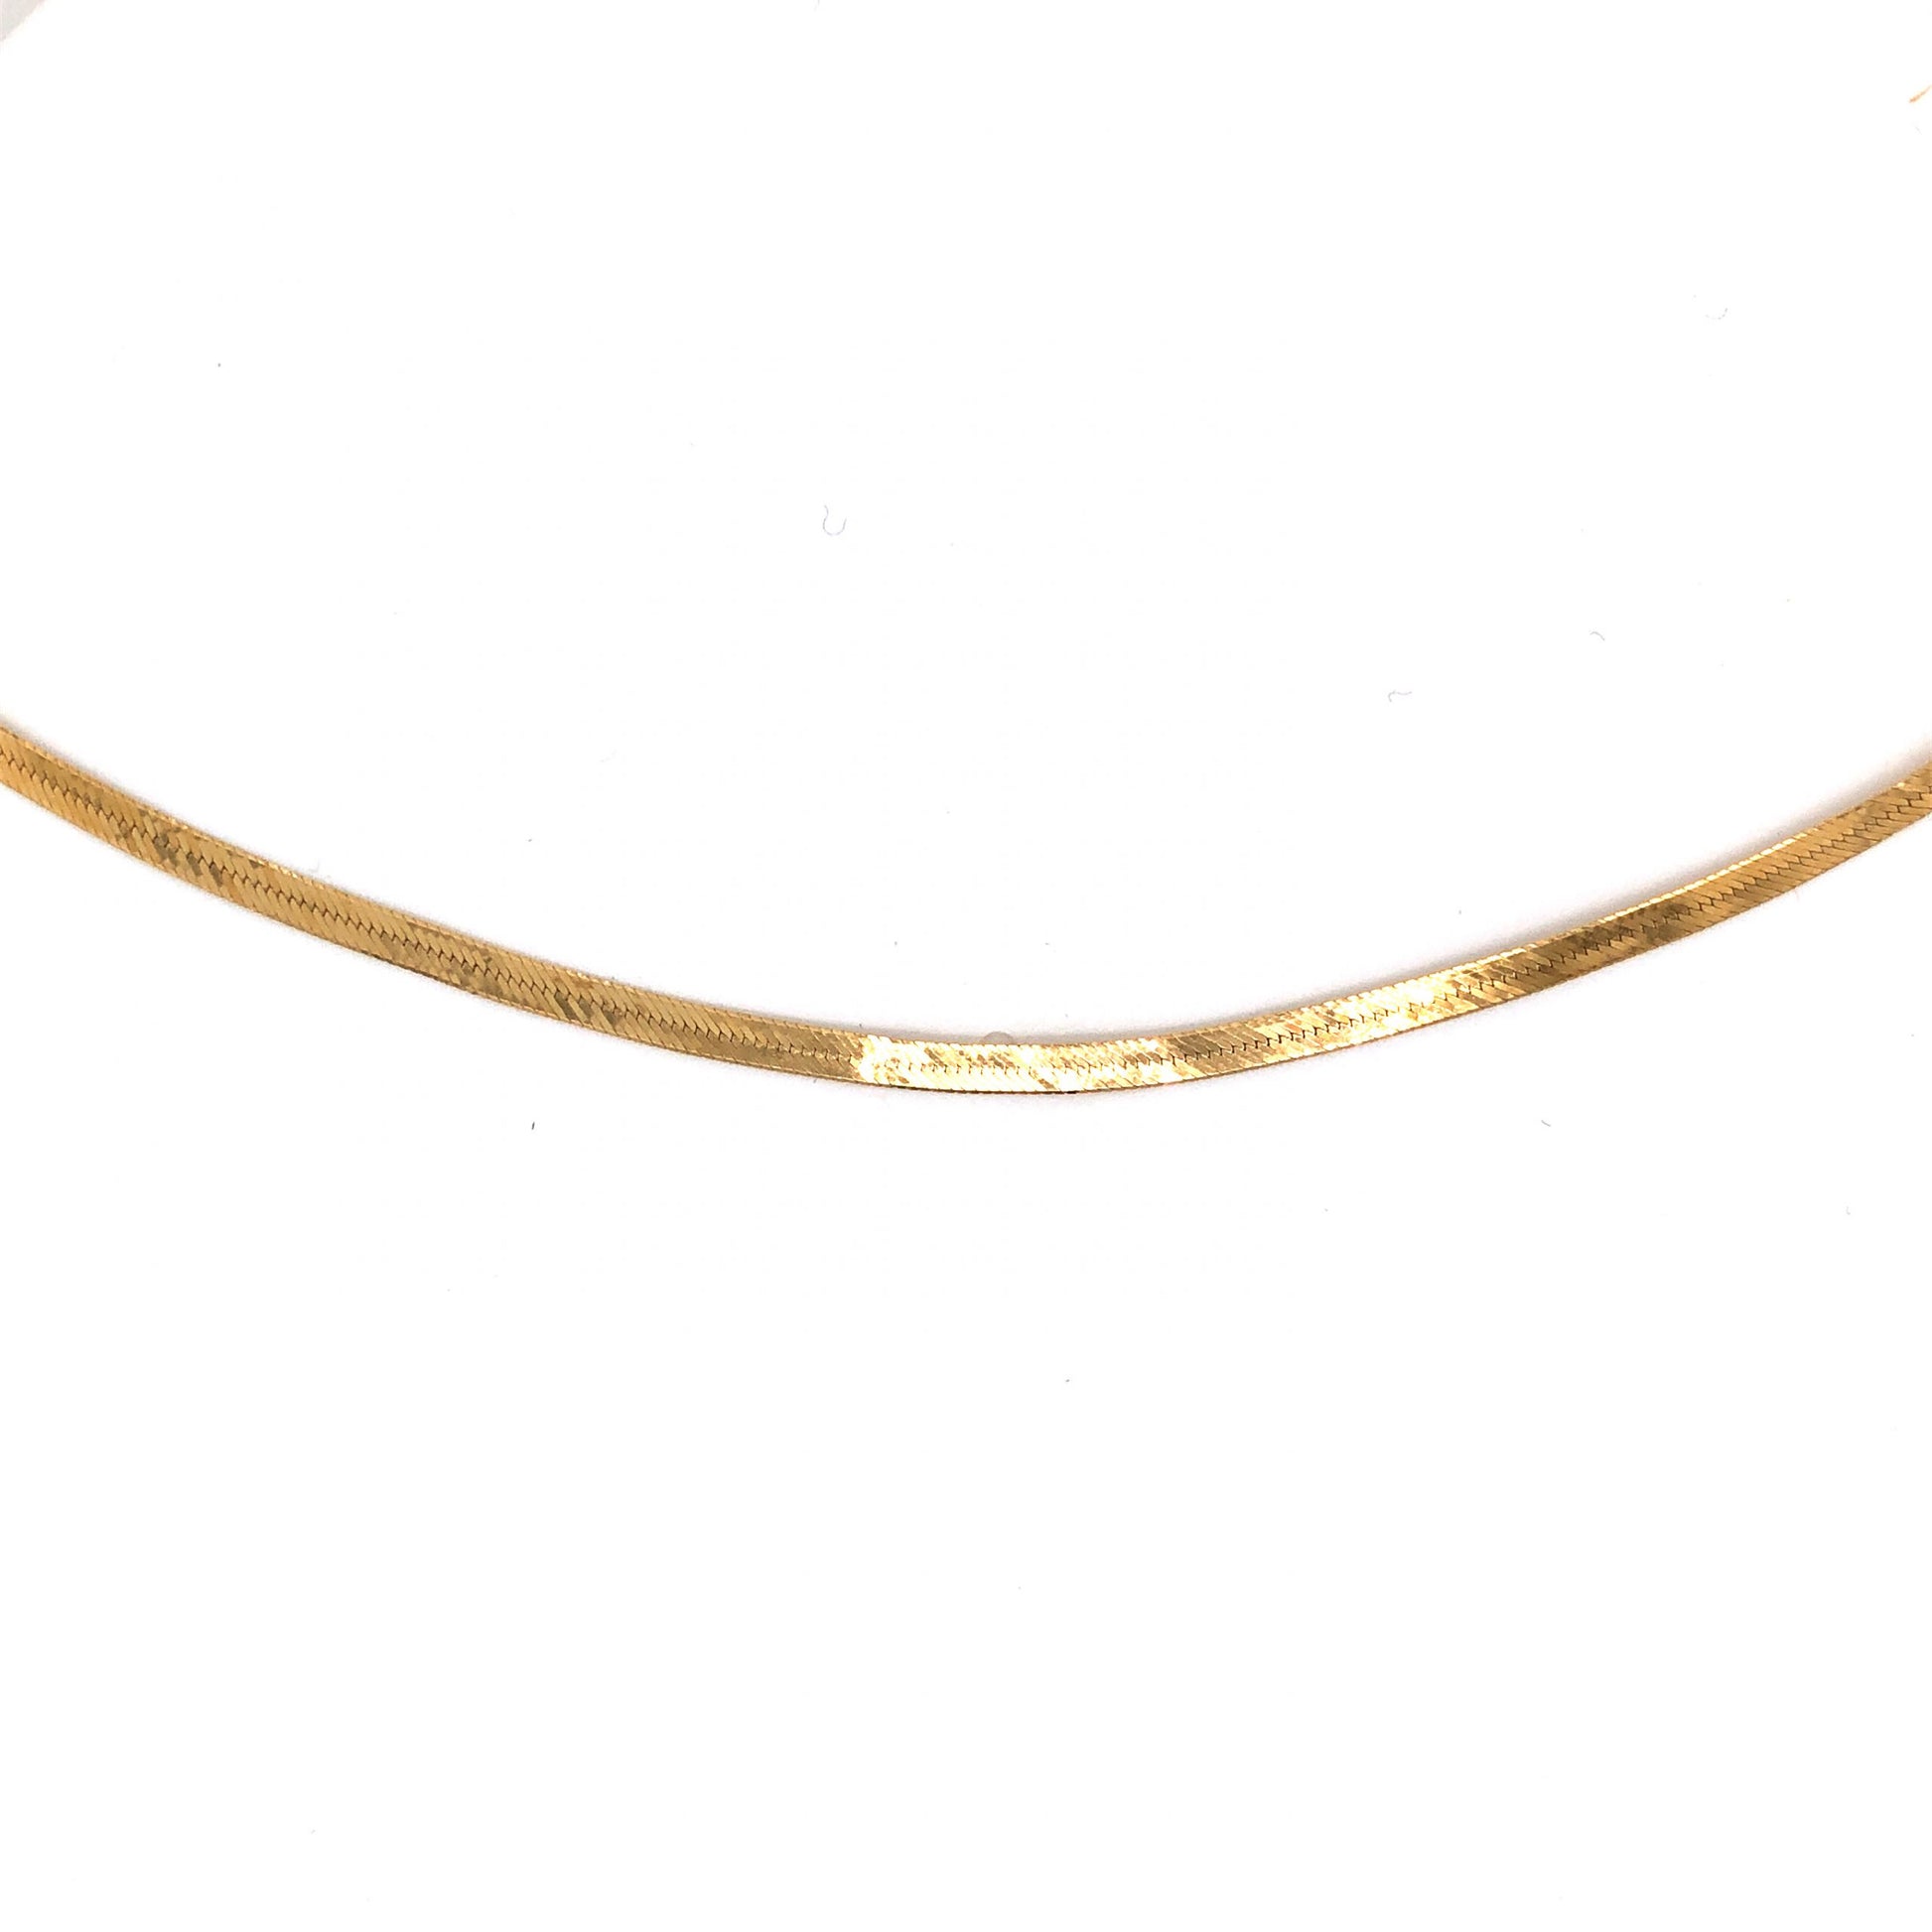 18 Inch Herringbone Necklace in 14k Yellow GoldComposition: 14 Karat Yellow GoldTotal Gram Weight: 4.7 g